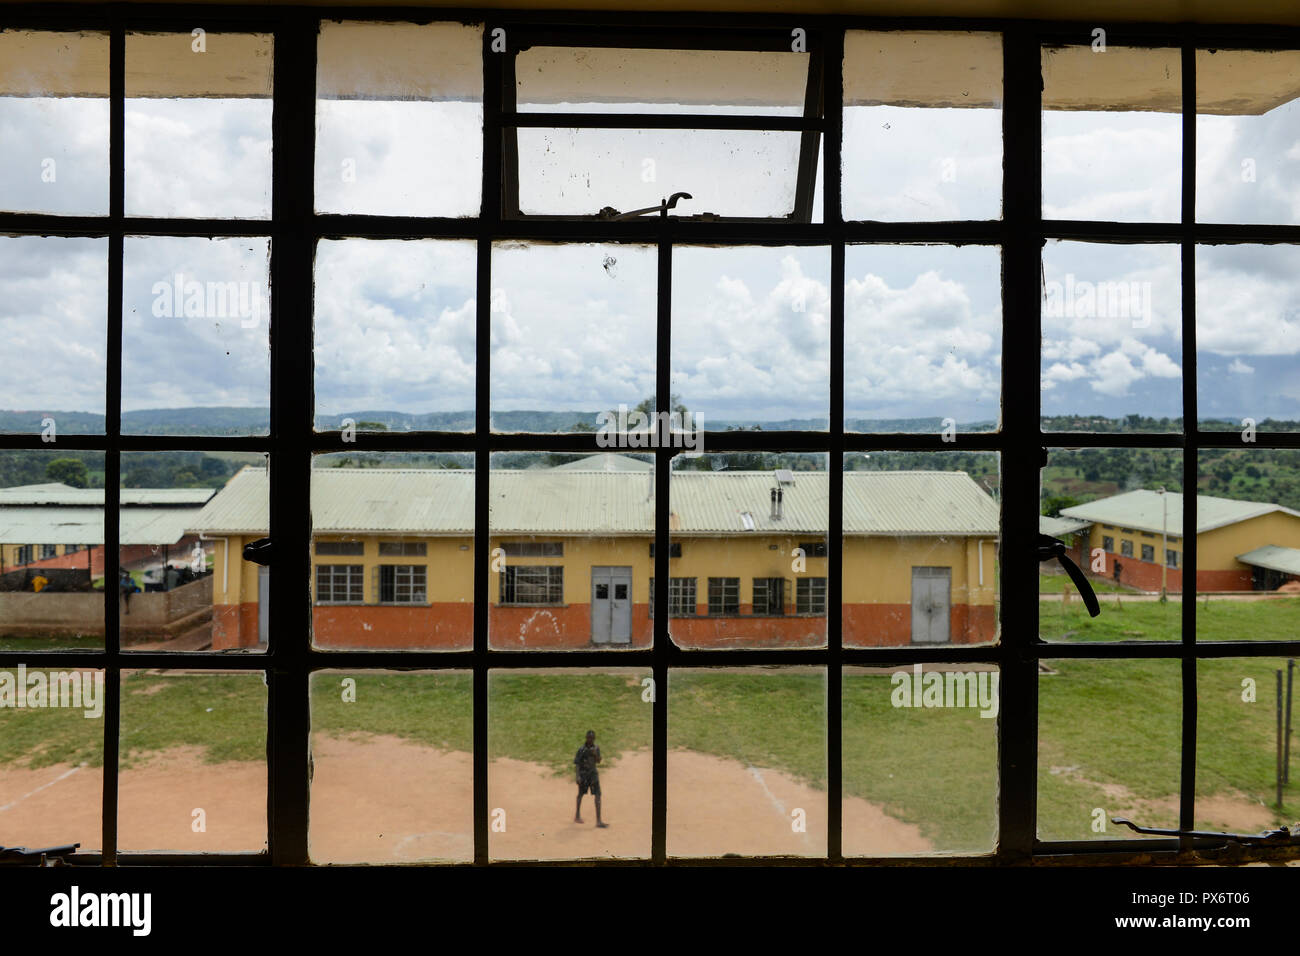 UGANDA, Kampala, Kampiringisa, nazionale centro di riabilitazione, un teenager-struttura di detenzione per bambini e giovani / Jugendhaftanstalt und Rehabilitationszentrum Kampiringisa Foto Stock